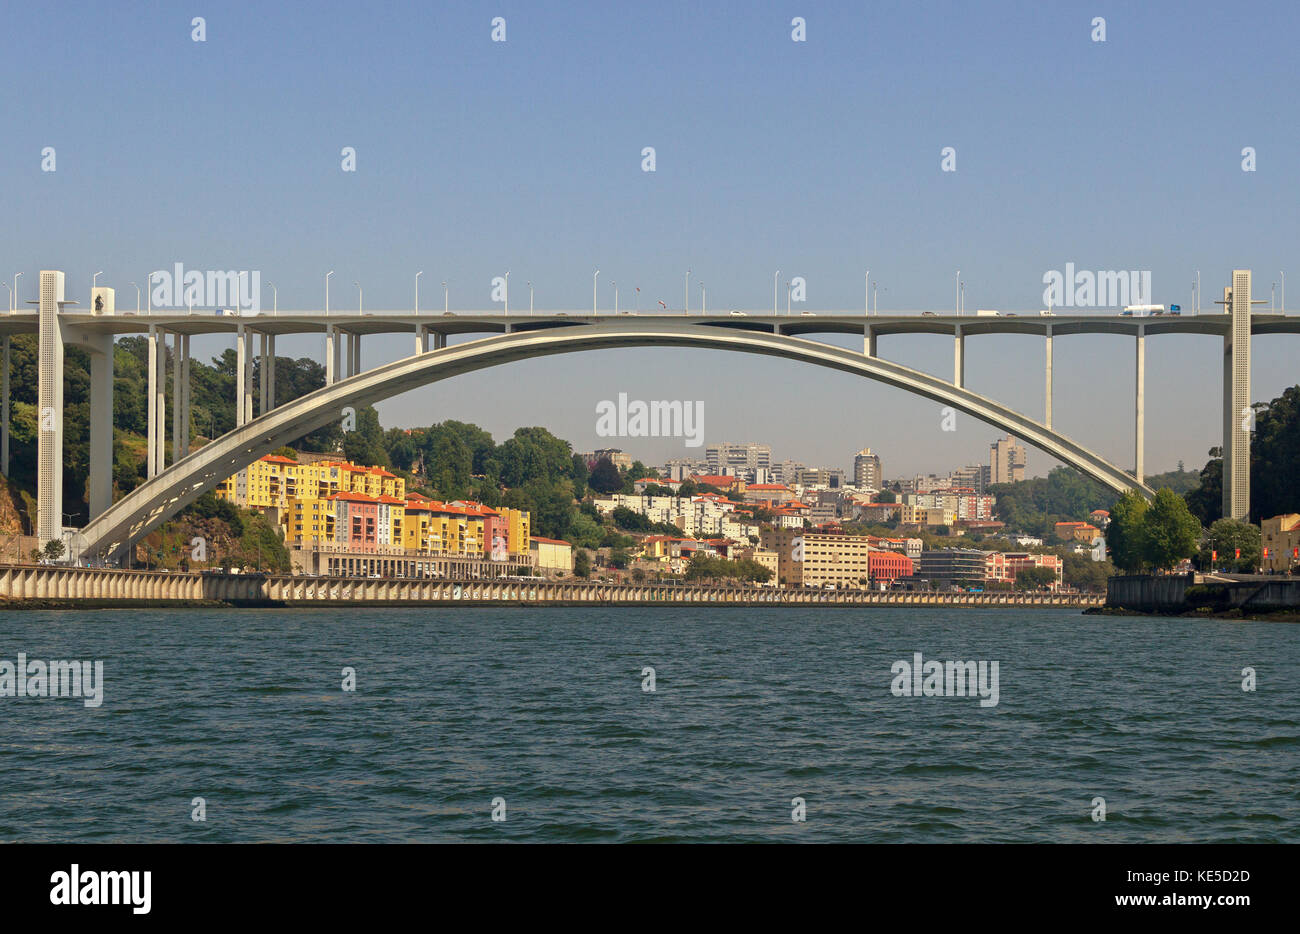 PORTO, AFURADA, PORTUGAL- SEPTEMBER 6: View to the Porto, bridge above the river Dora on 6 September 2016, Porto, Afurada, Portugal. Stock Photo